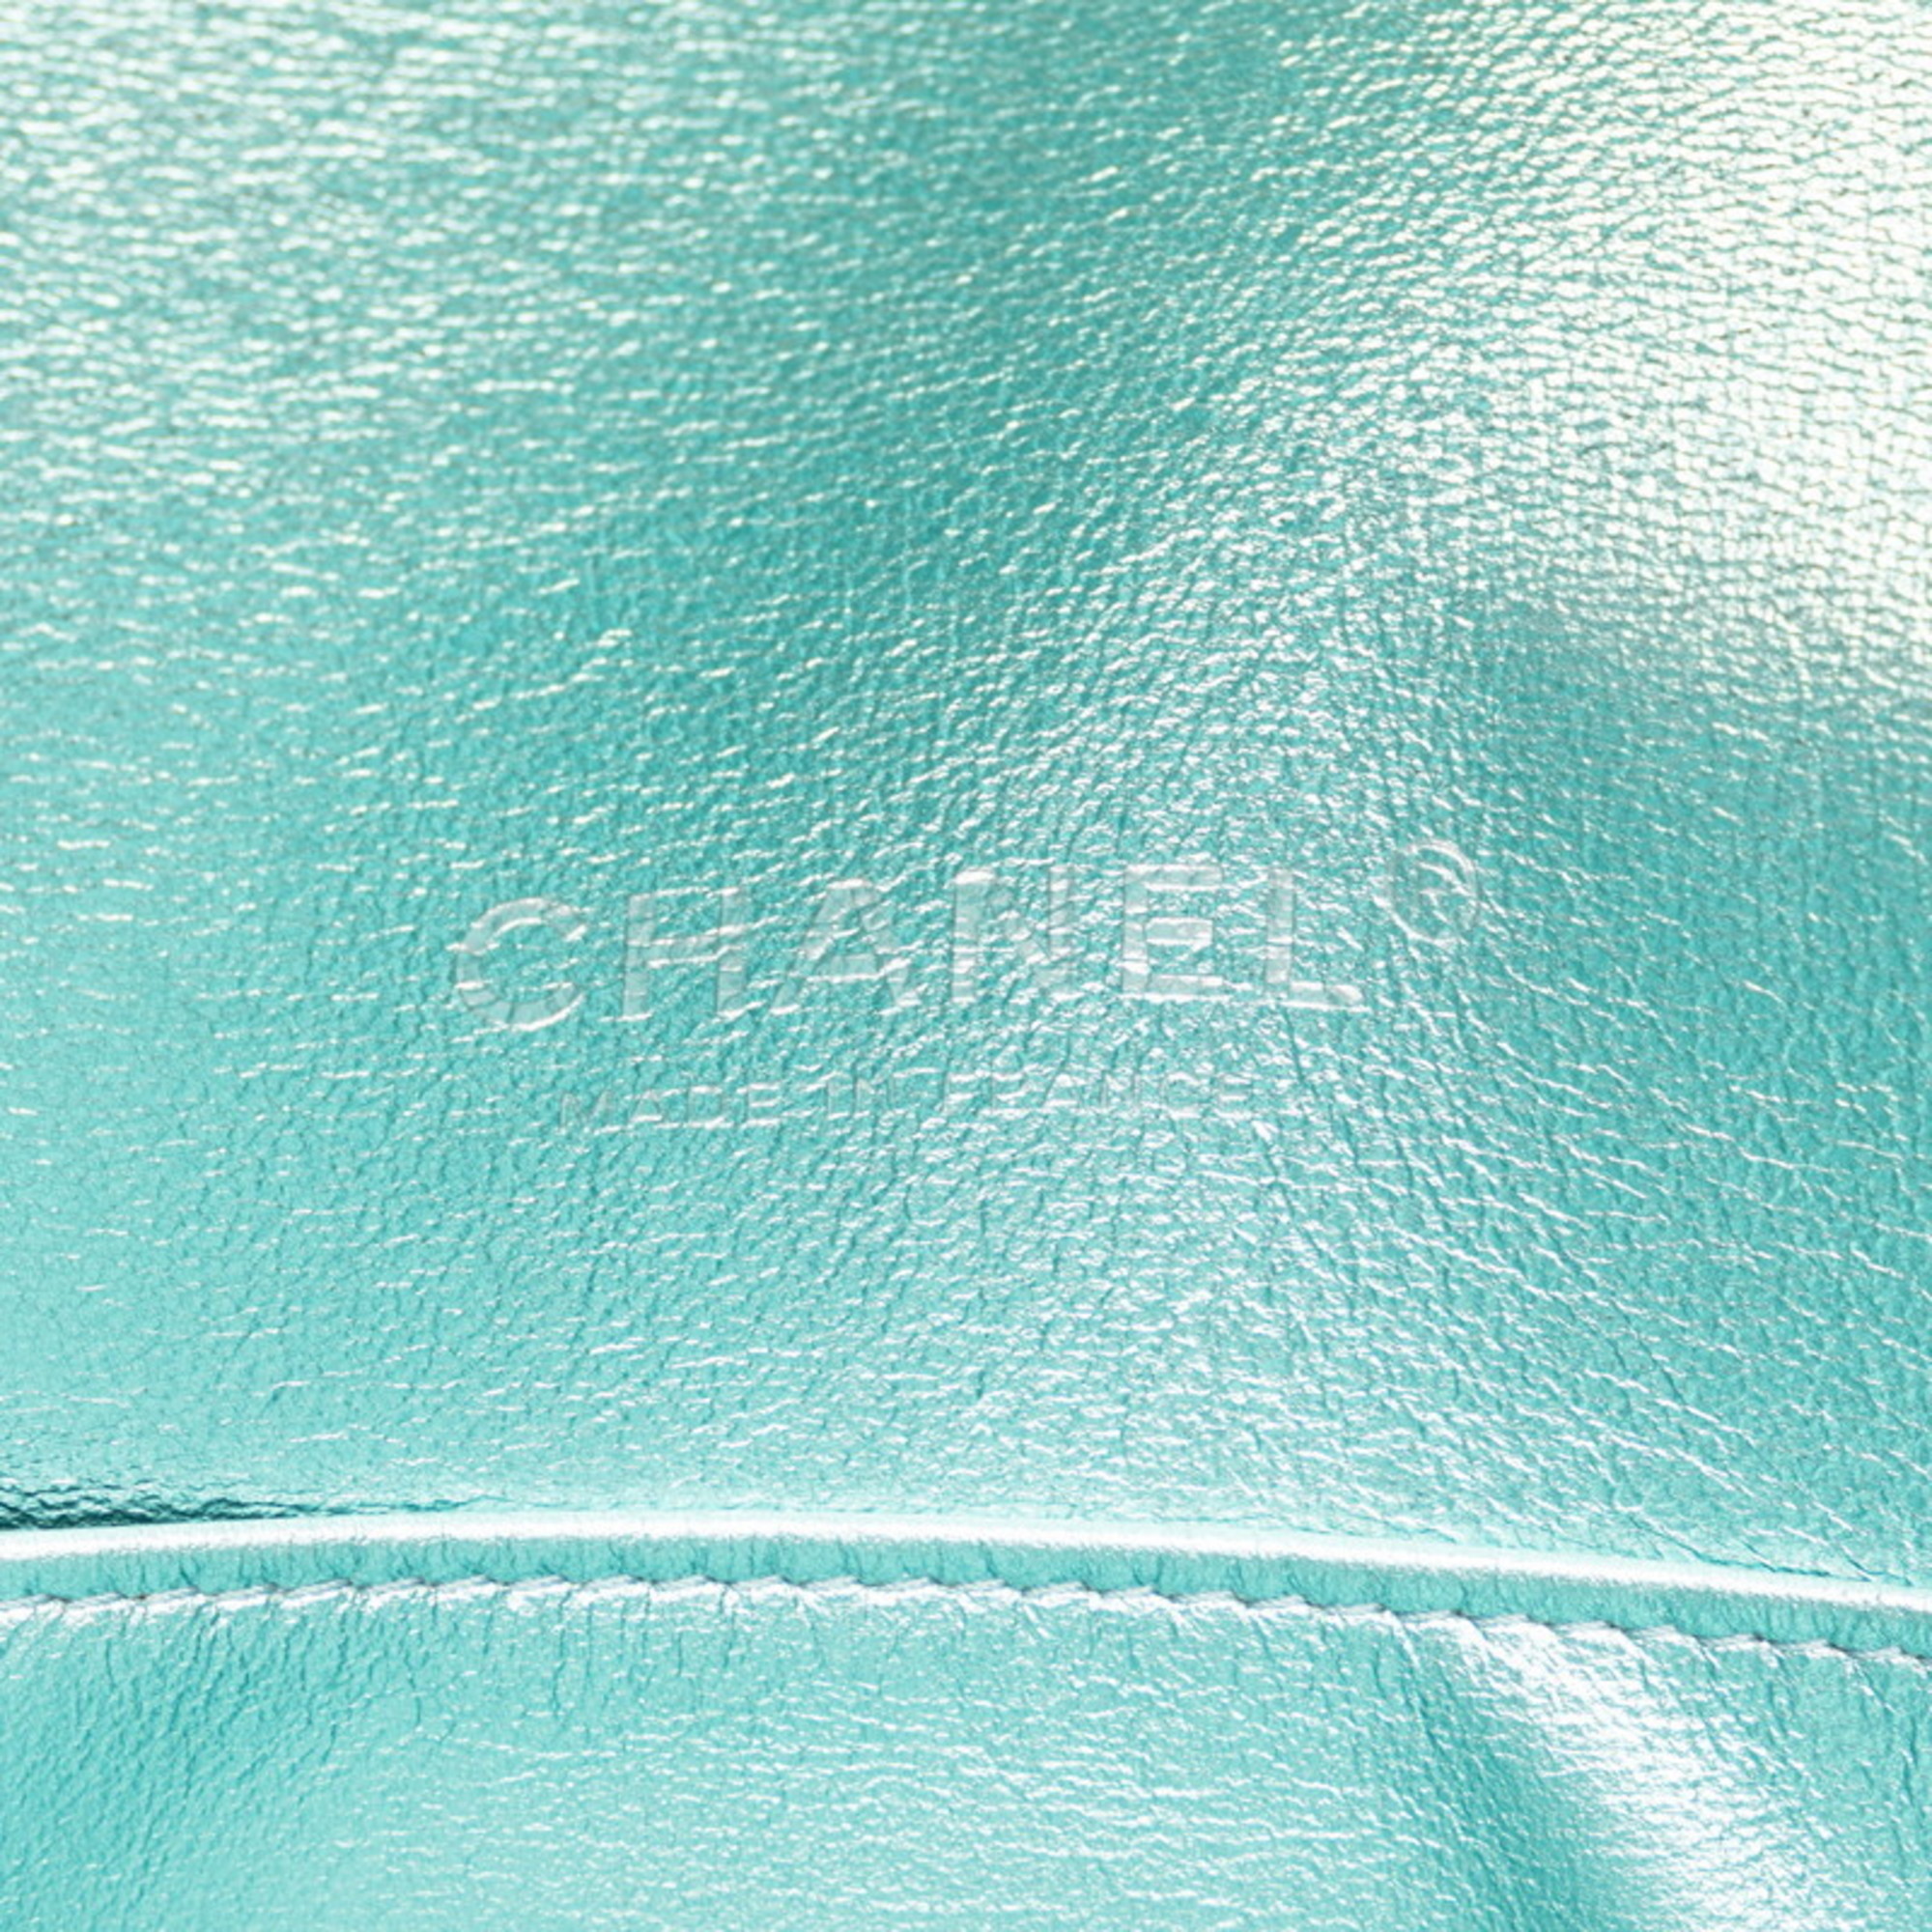 Chanel Black Lace Coco Mark Star Chain Shoulder Bag Metallic Blue Vinyl Calfskin Women's CHANEL